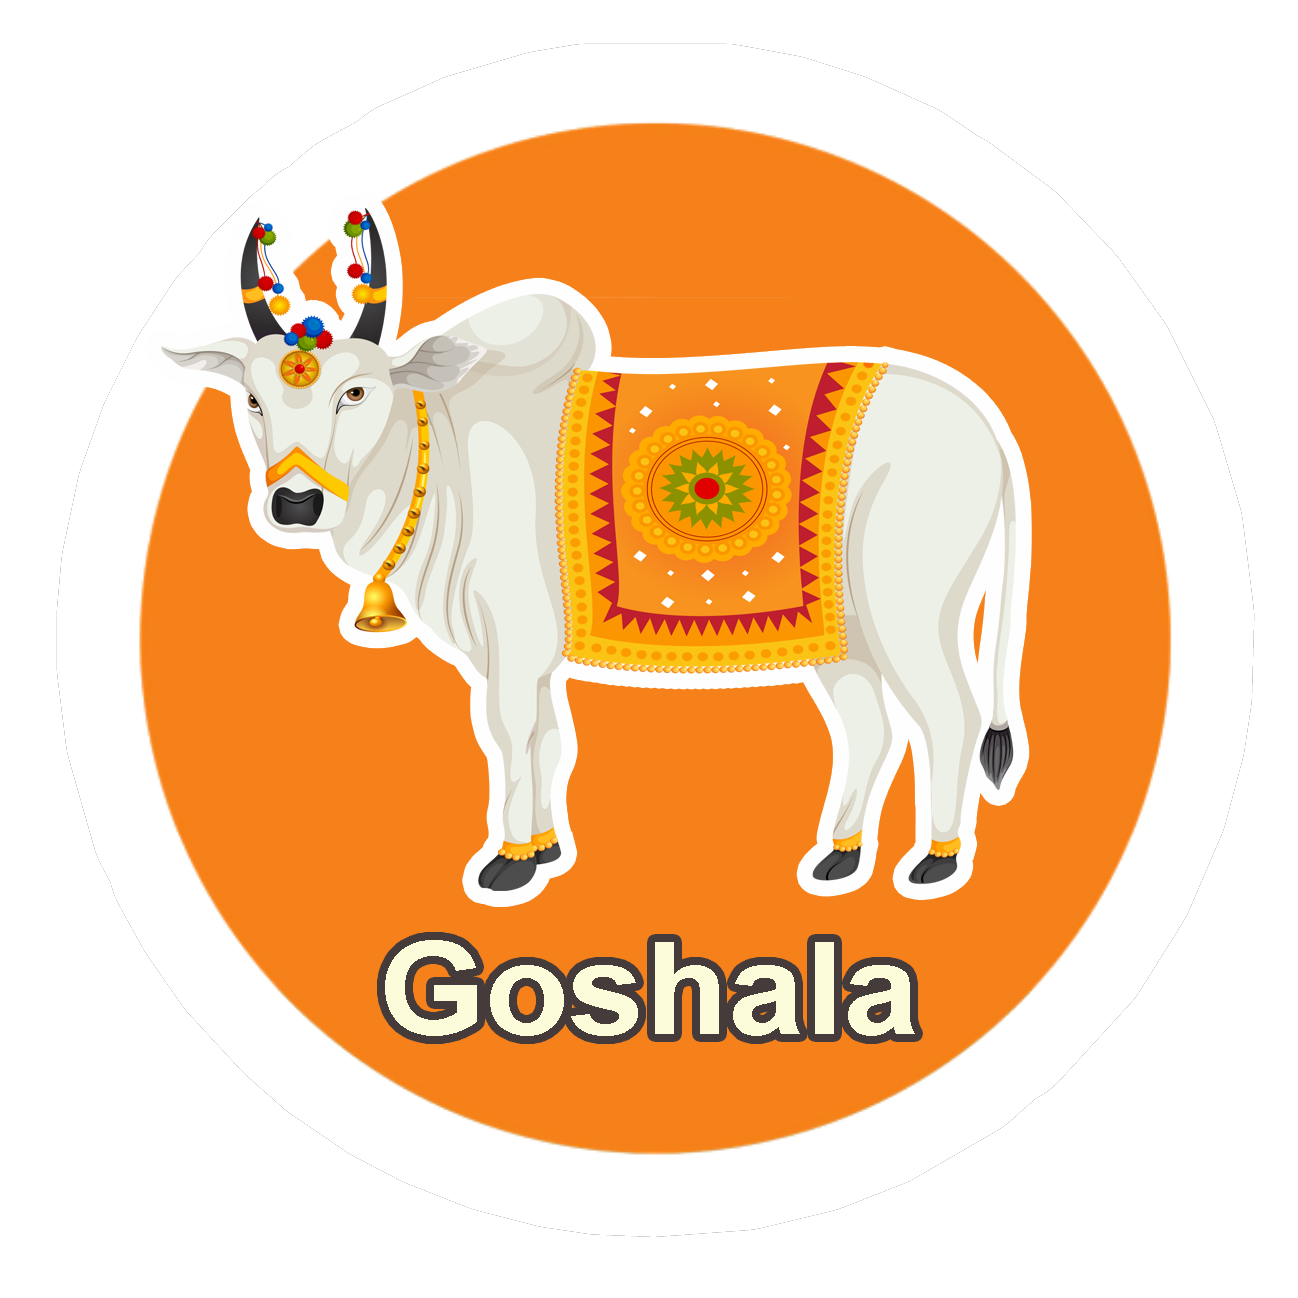   goshala    